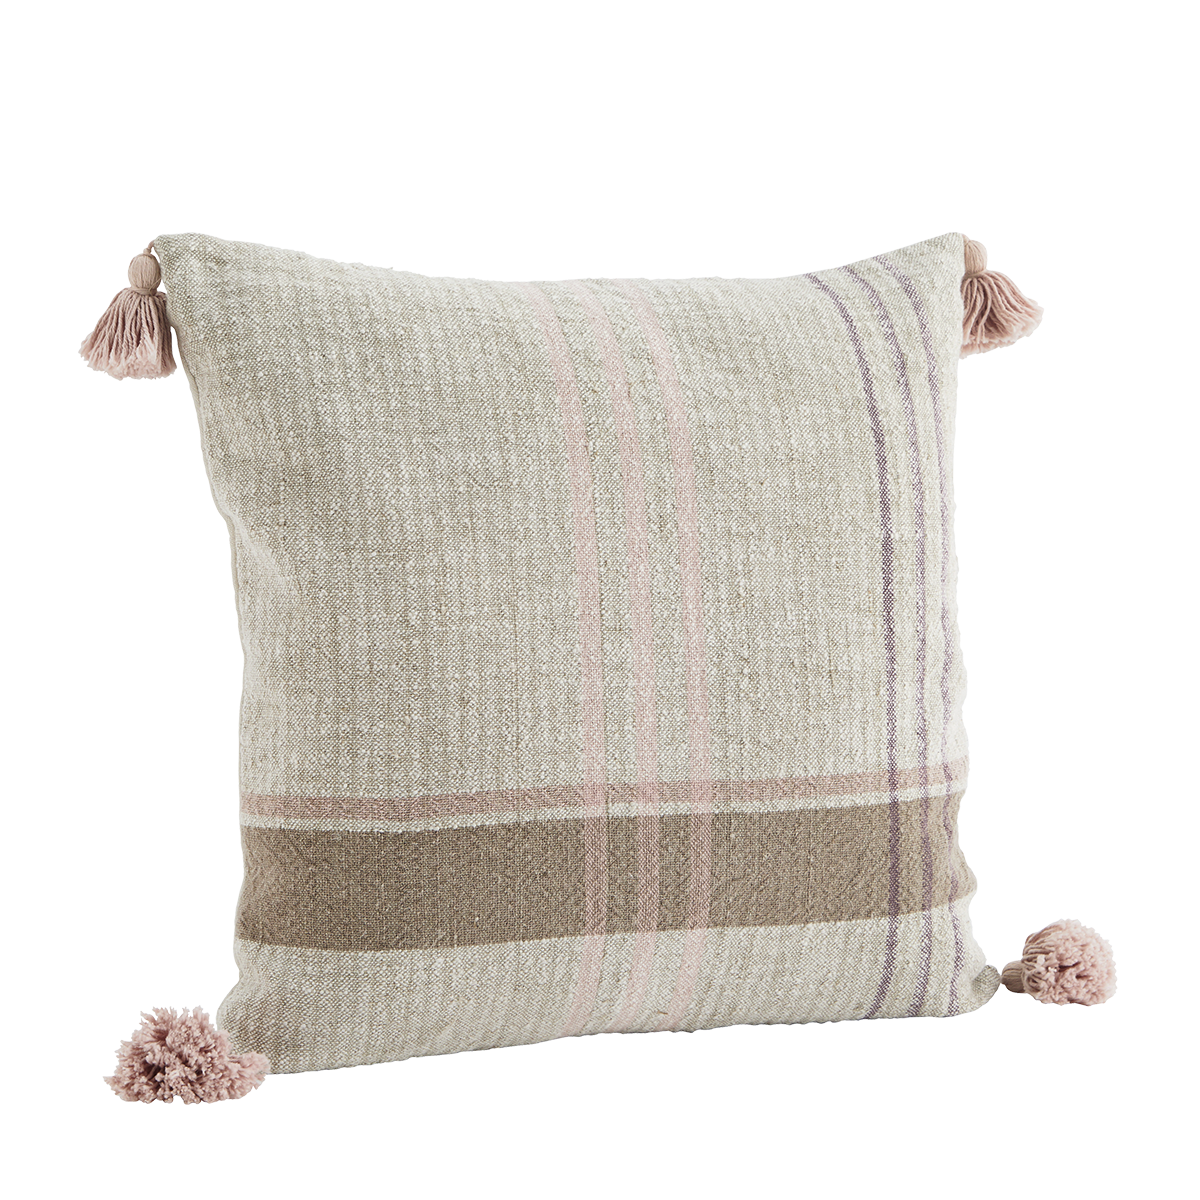 Woven cushion cover w/ tassels